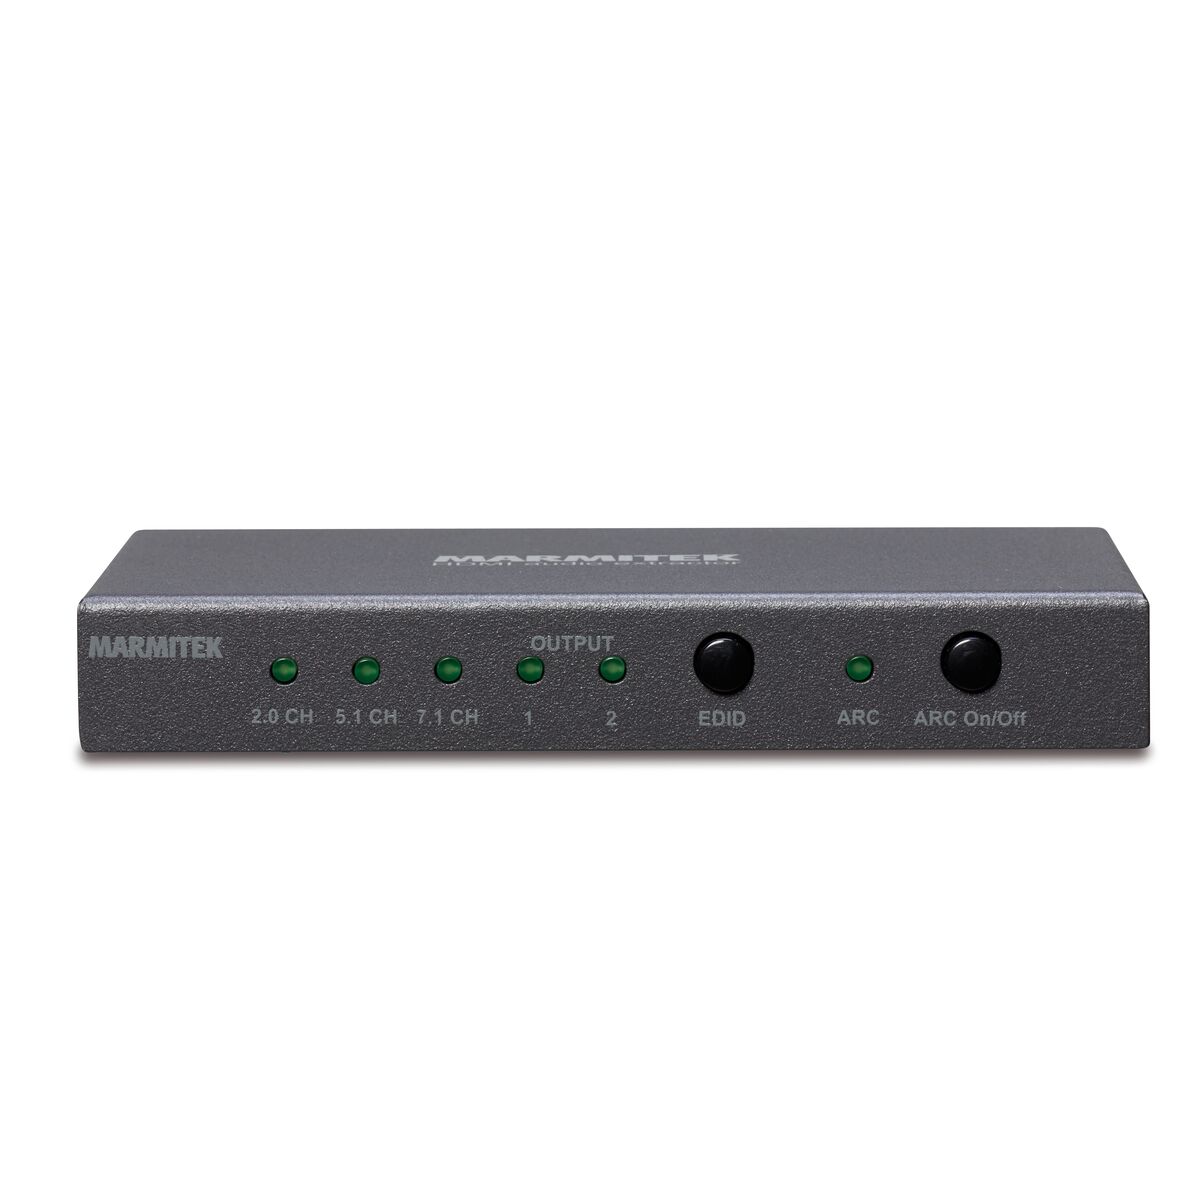 Connect AE24 UHD 2.0 - HDMI audio extractor 4K - 4K60 - HDR - ARC - 18 Gbps Top Merken Winkel